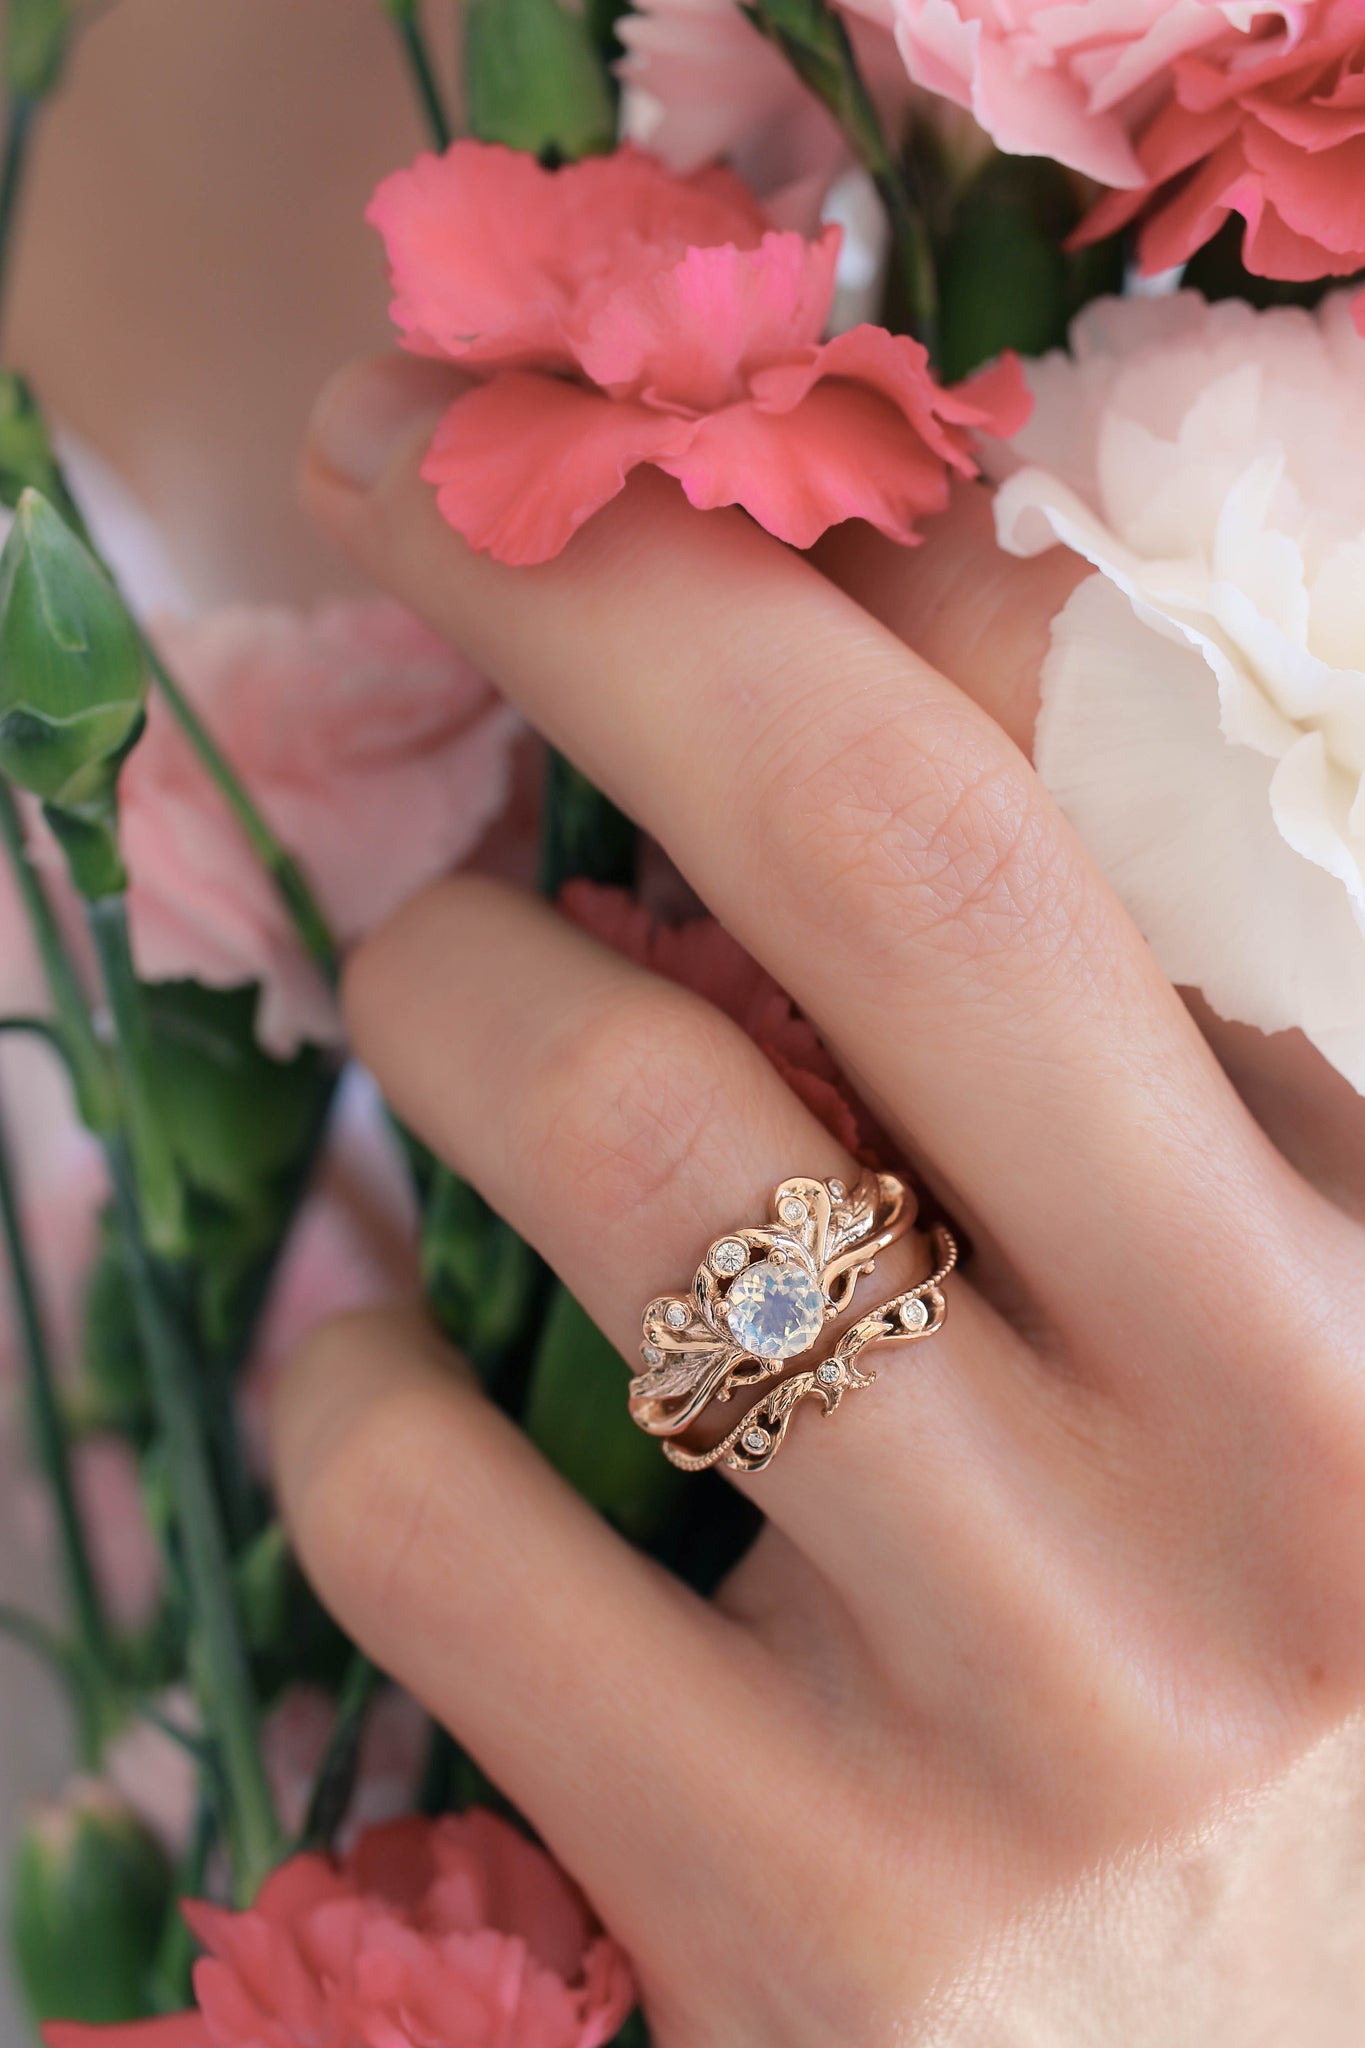 Blue moonstone vintage style bridal ring set / Damariss - Eden Garden Jewelry™